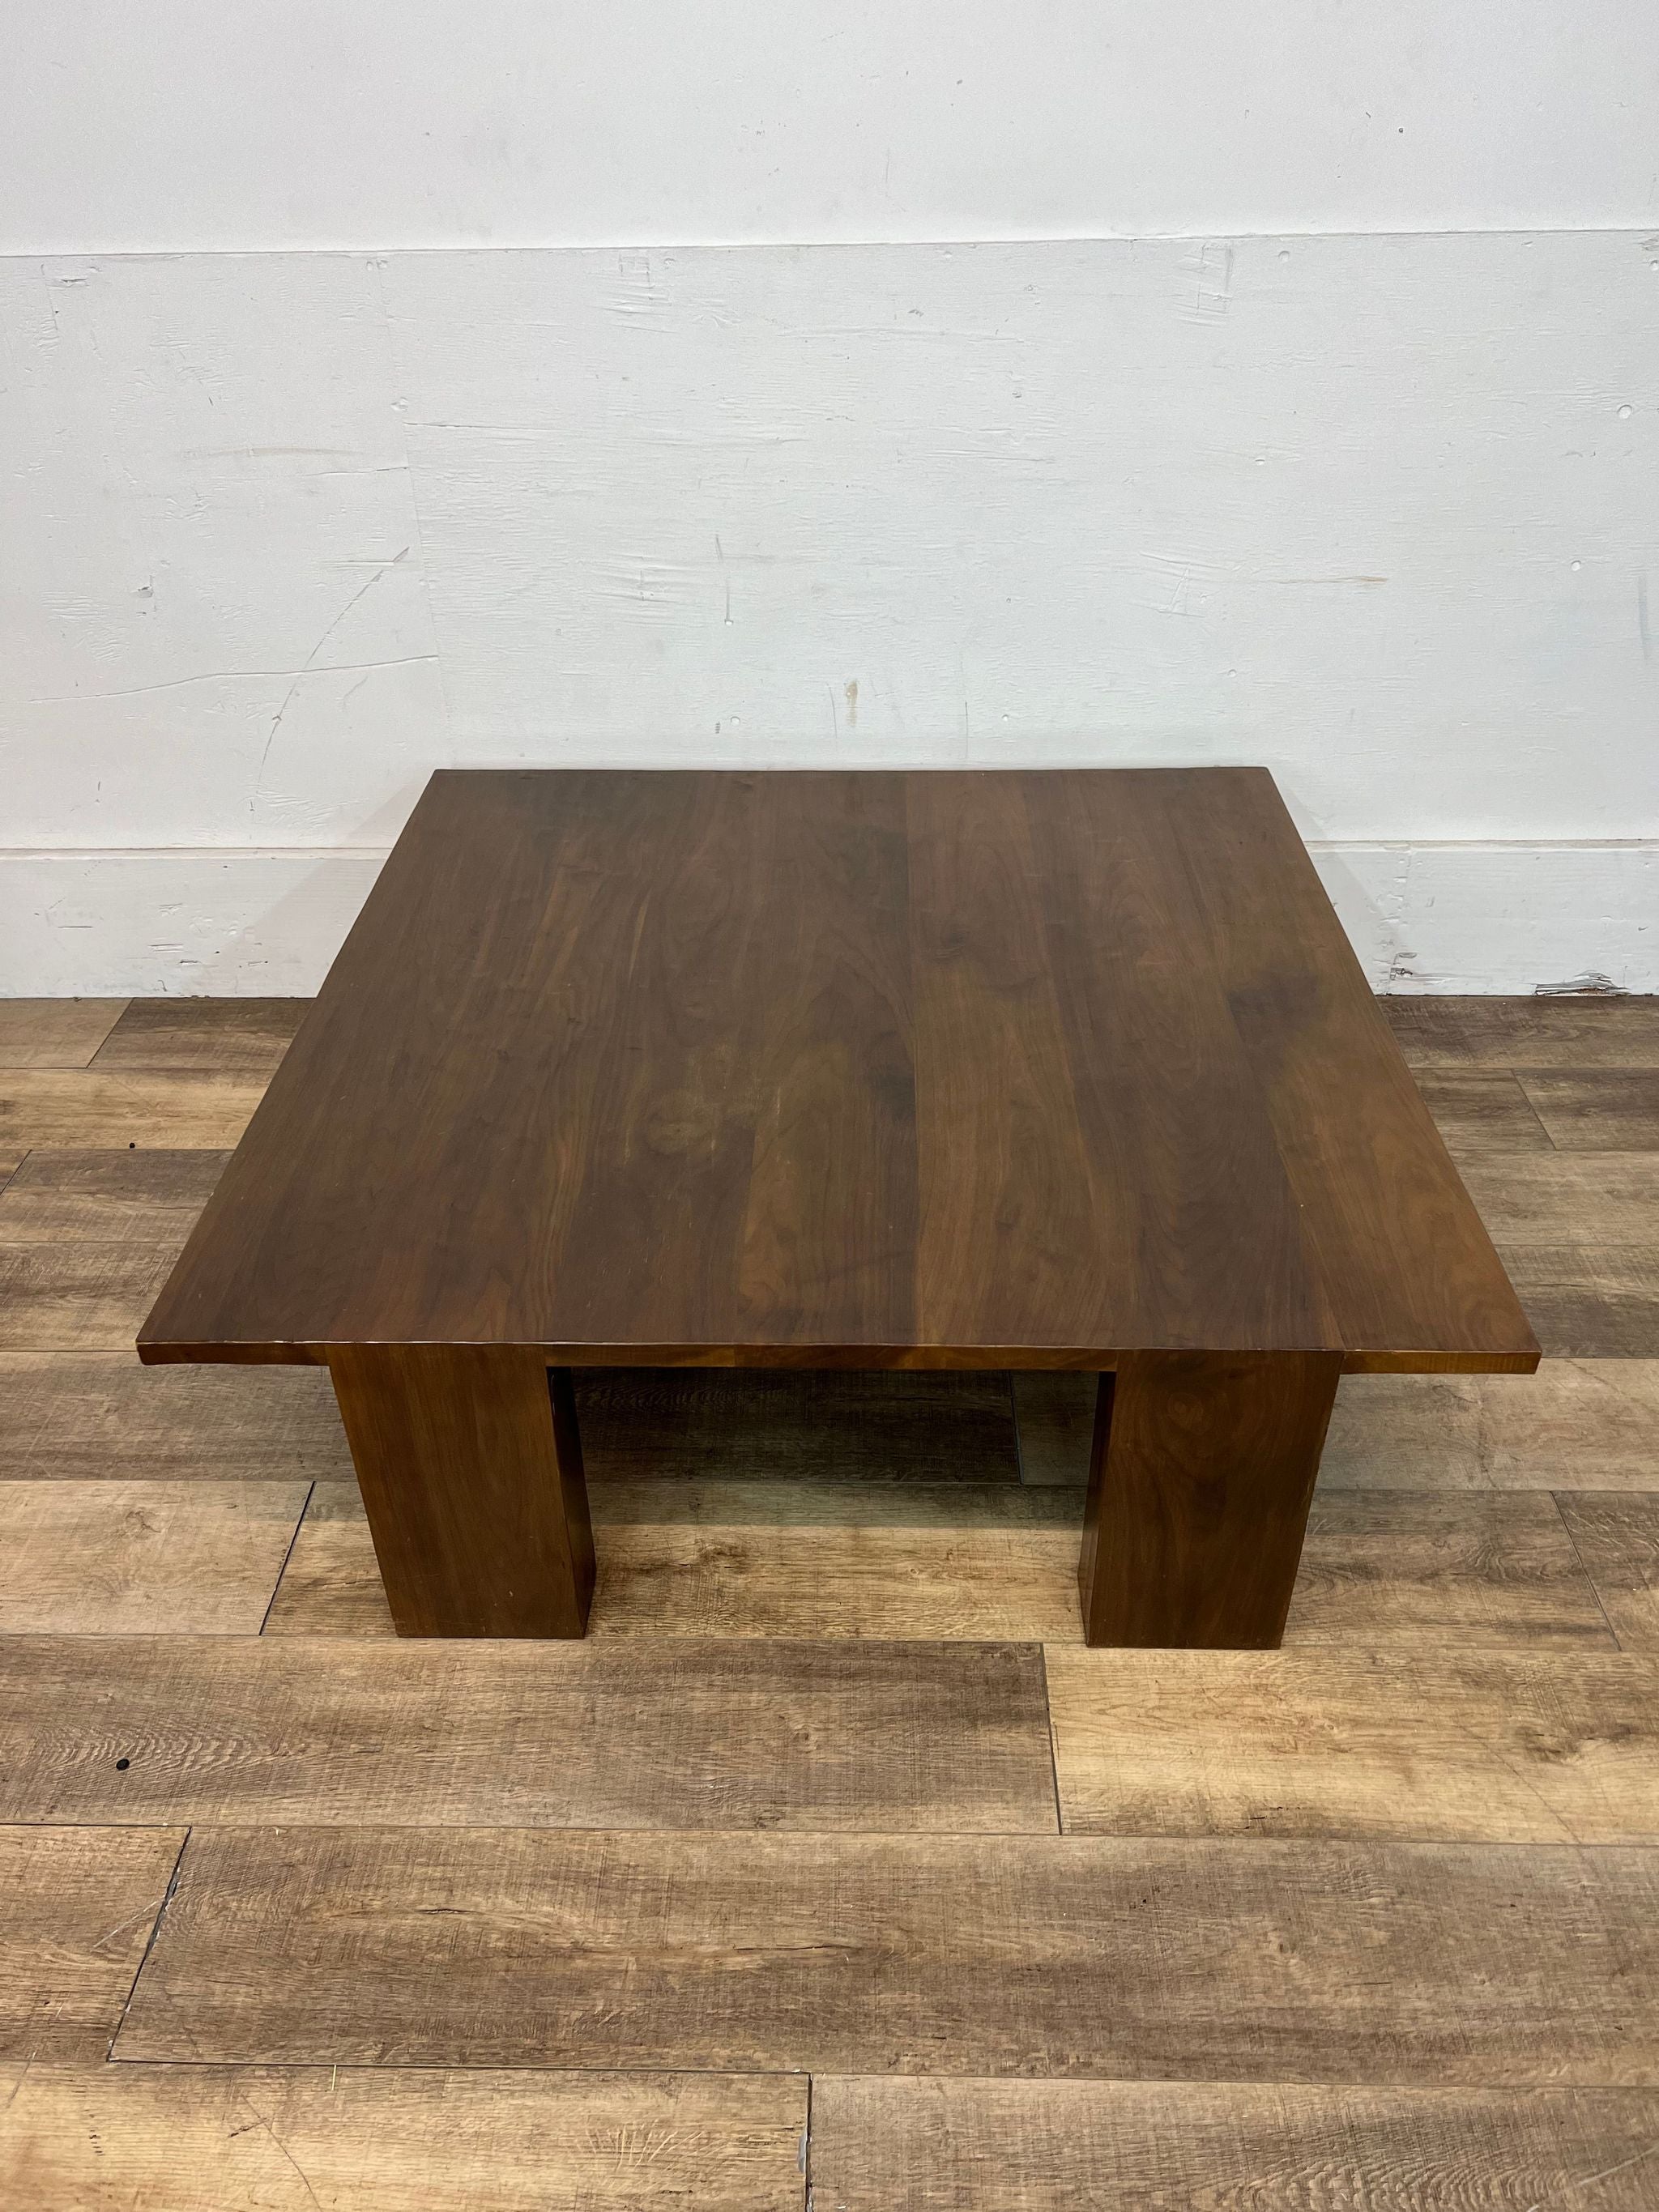 Kendall Wilkinson Design Workshop custom hewn walnut coffee table against a white wall on wooden flooring.